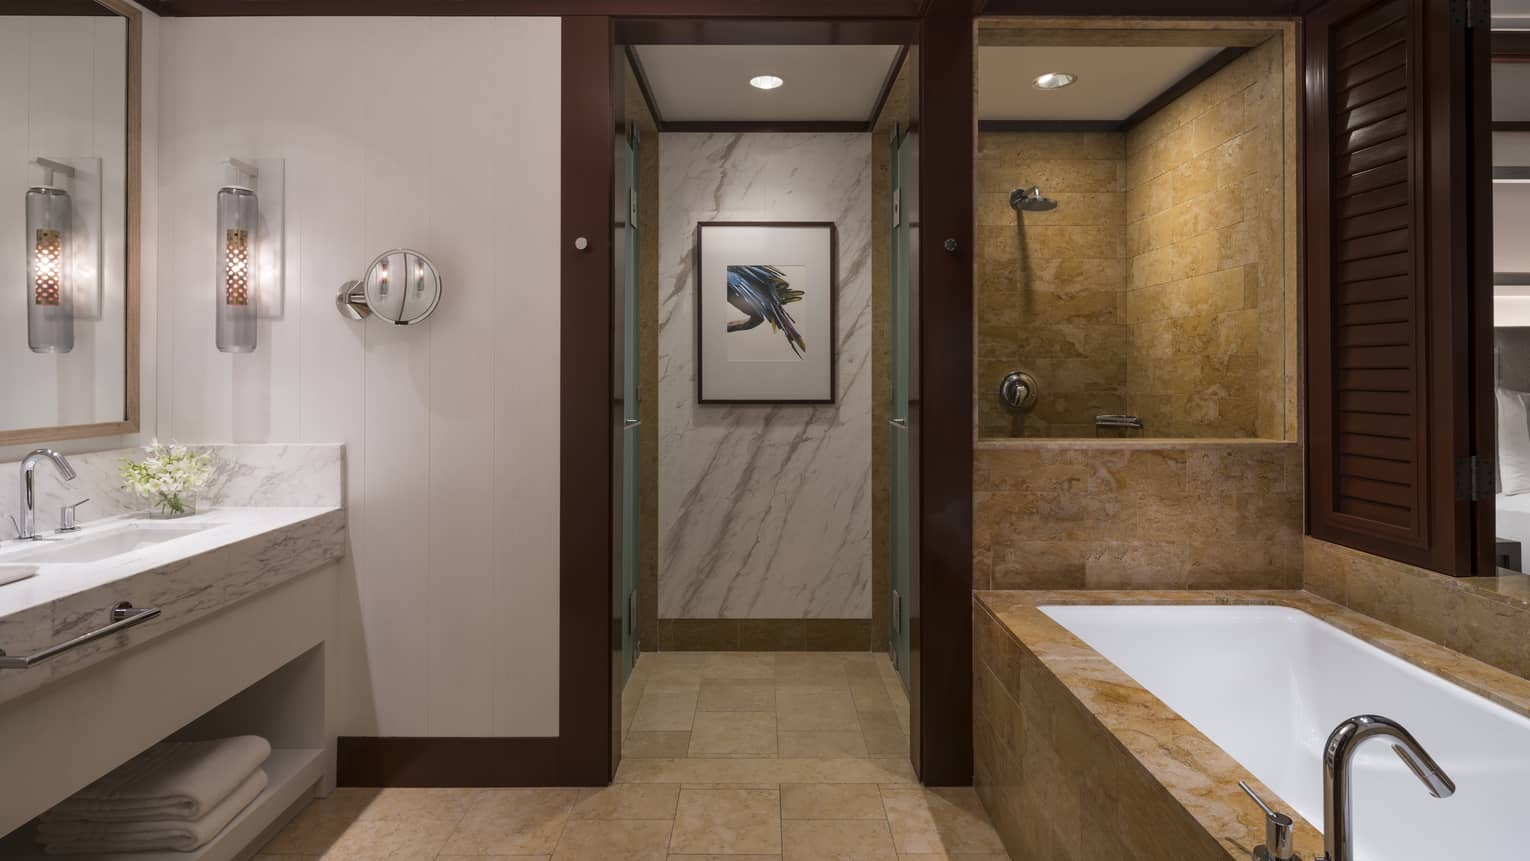 Bathroom Interior Featuring Bathtub, Shower, Sinks, and Interior Hallway